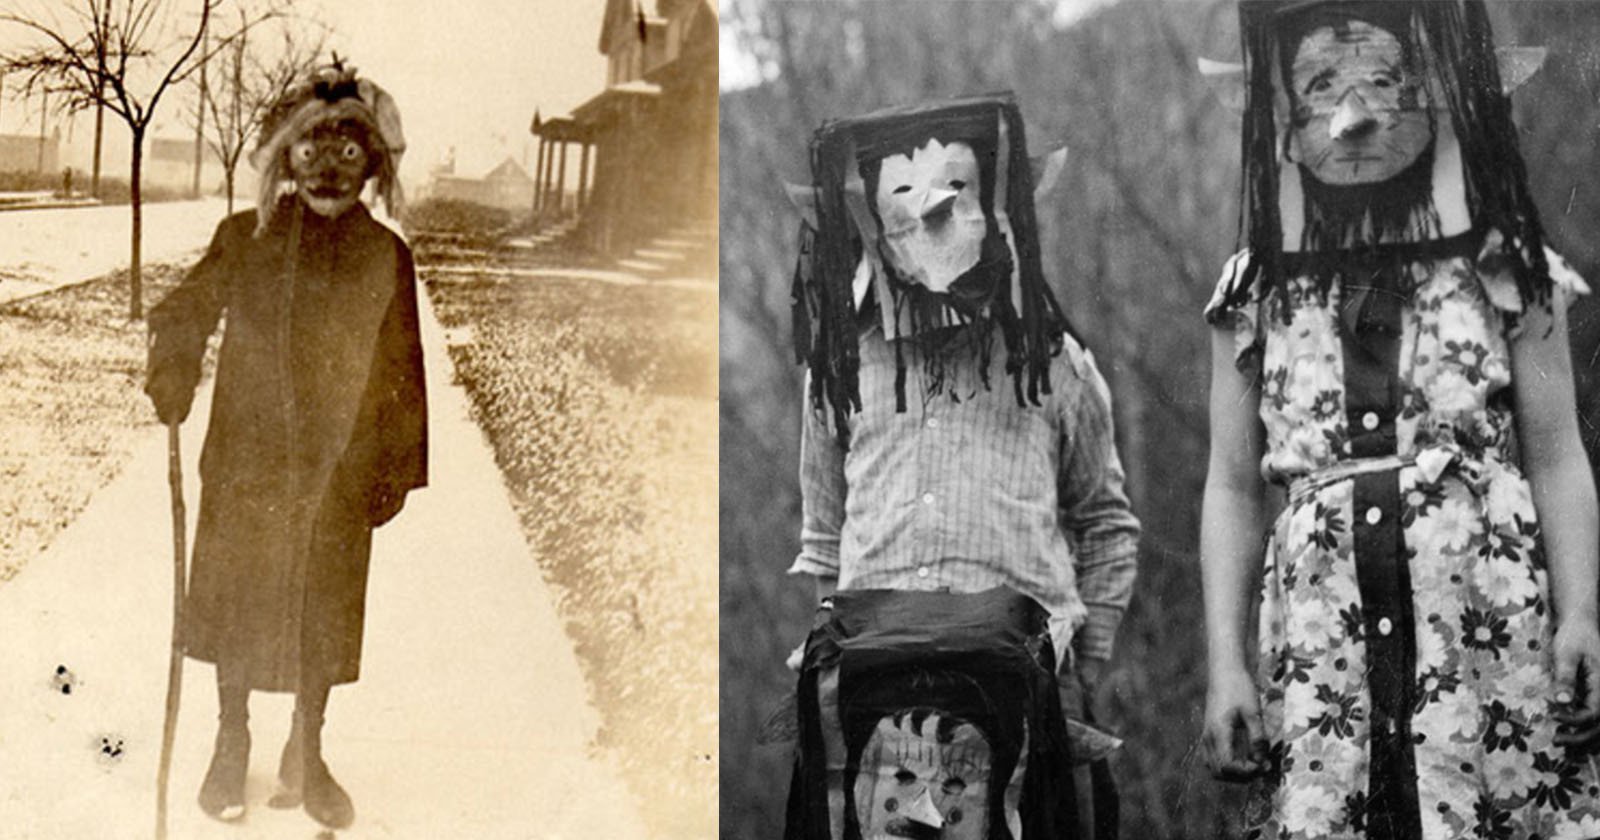  century-old photos spooky vintage halloween costumes 